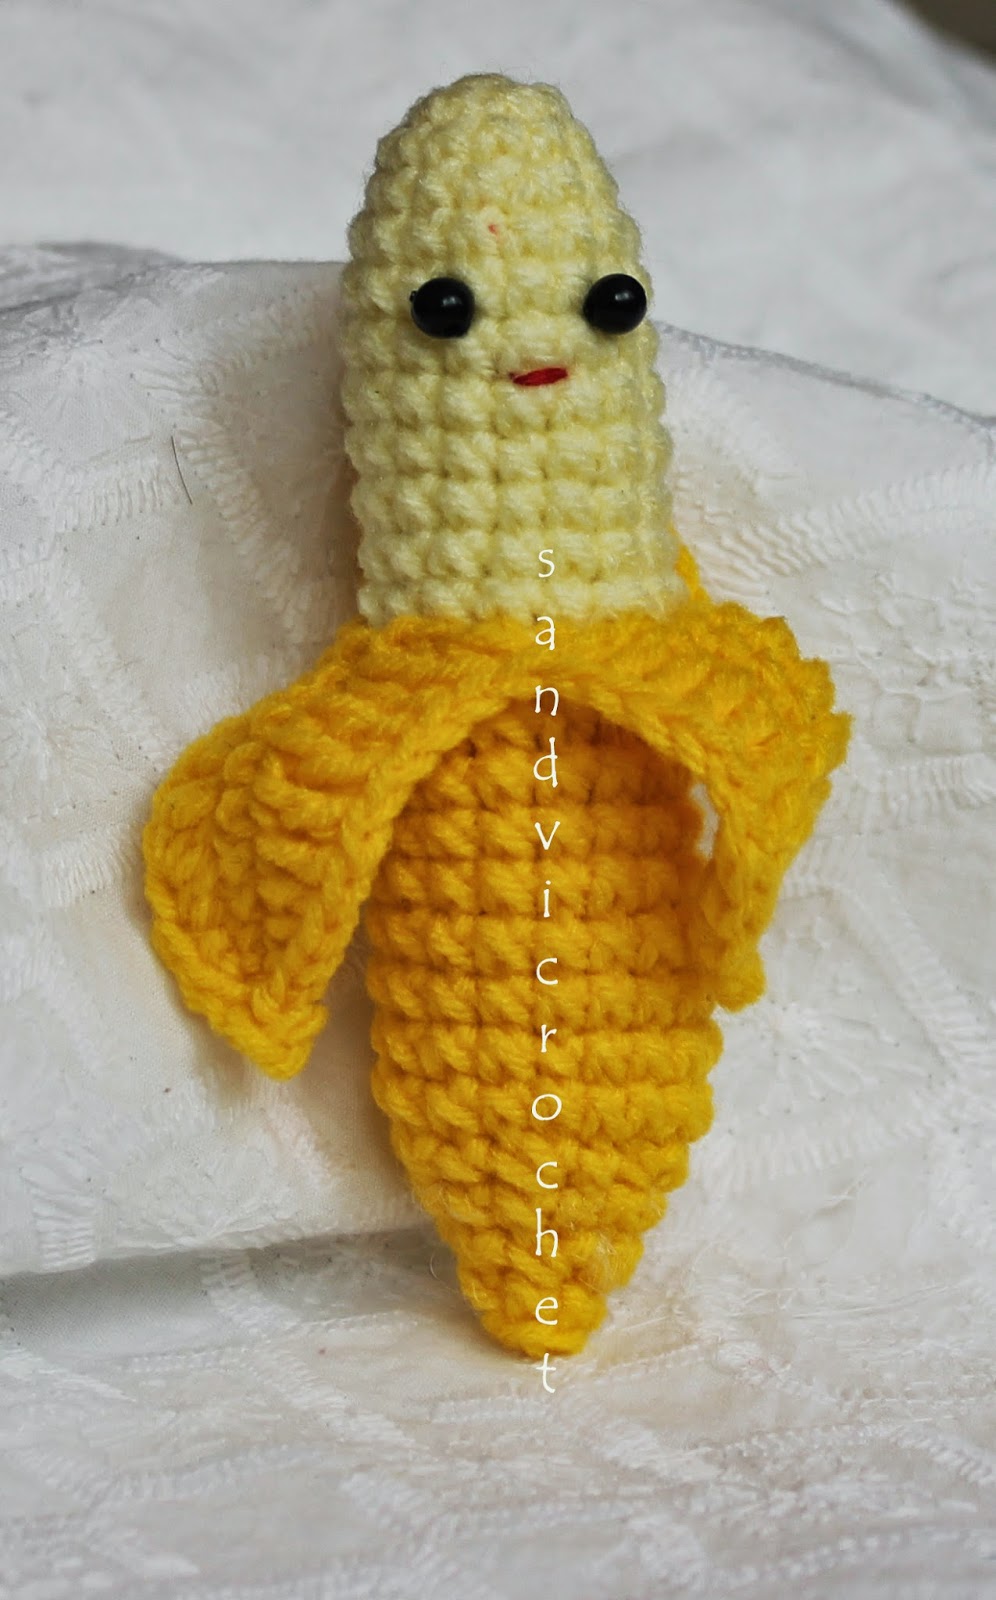 sandvicrochet: amigurumi banana